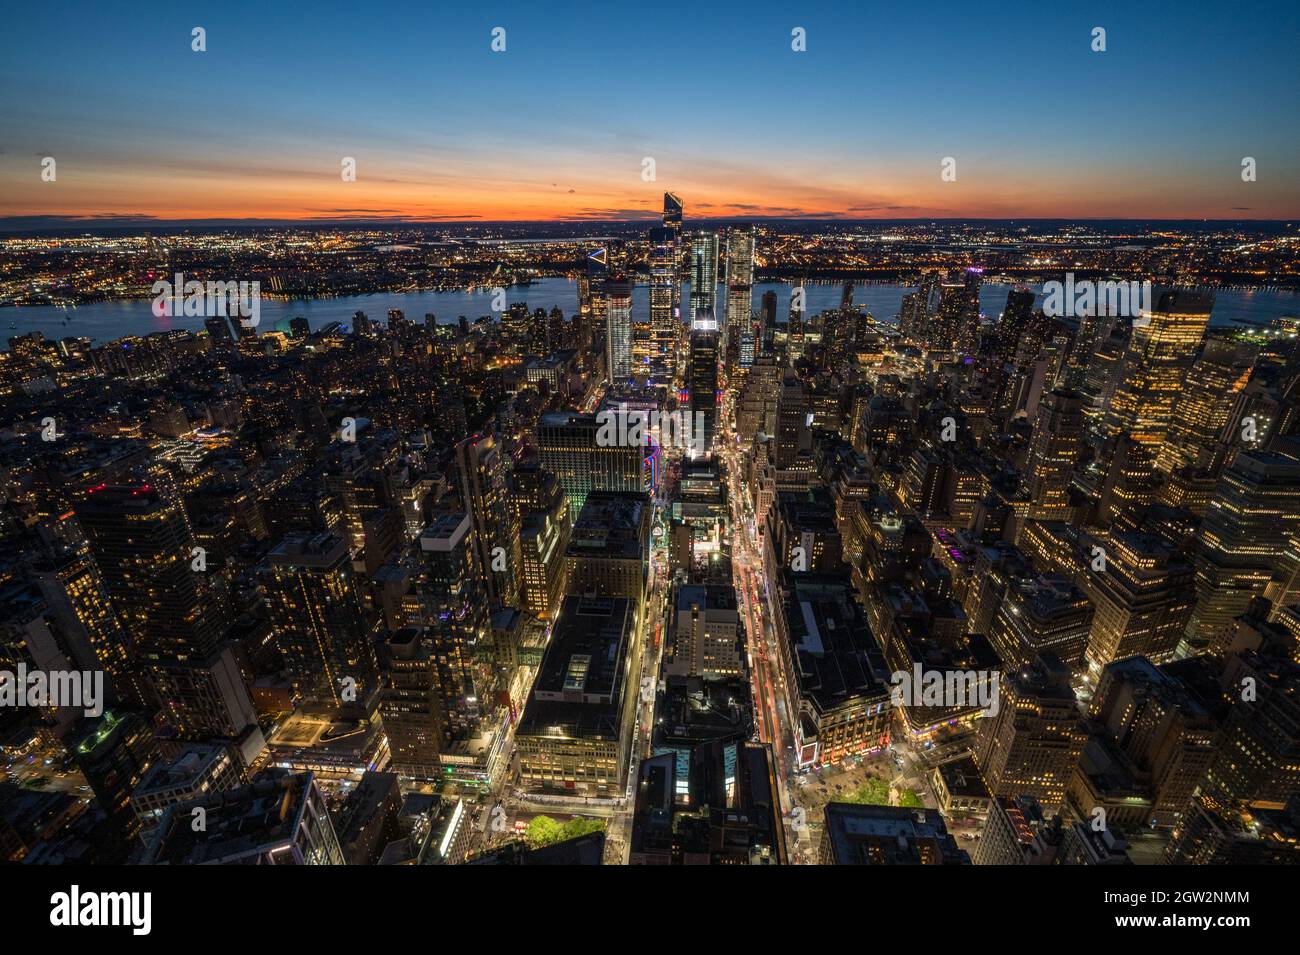 New York City buildings Stock Photo